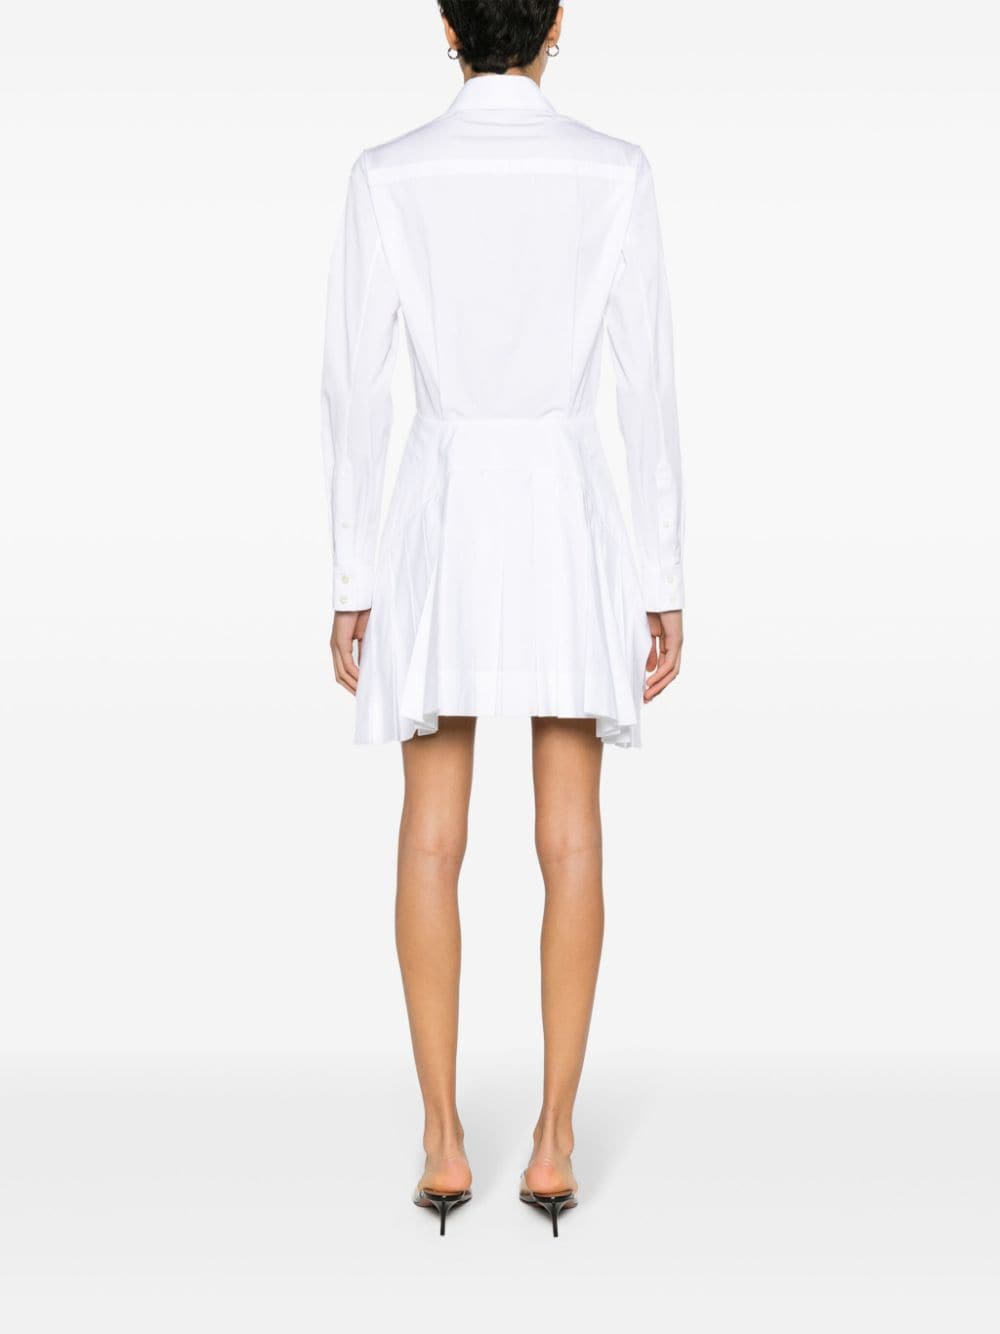 ALAIA White Cotton Blend Shirt Dress for Women